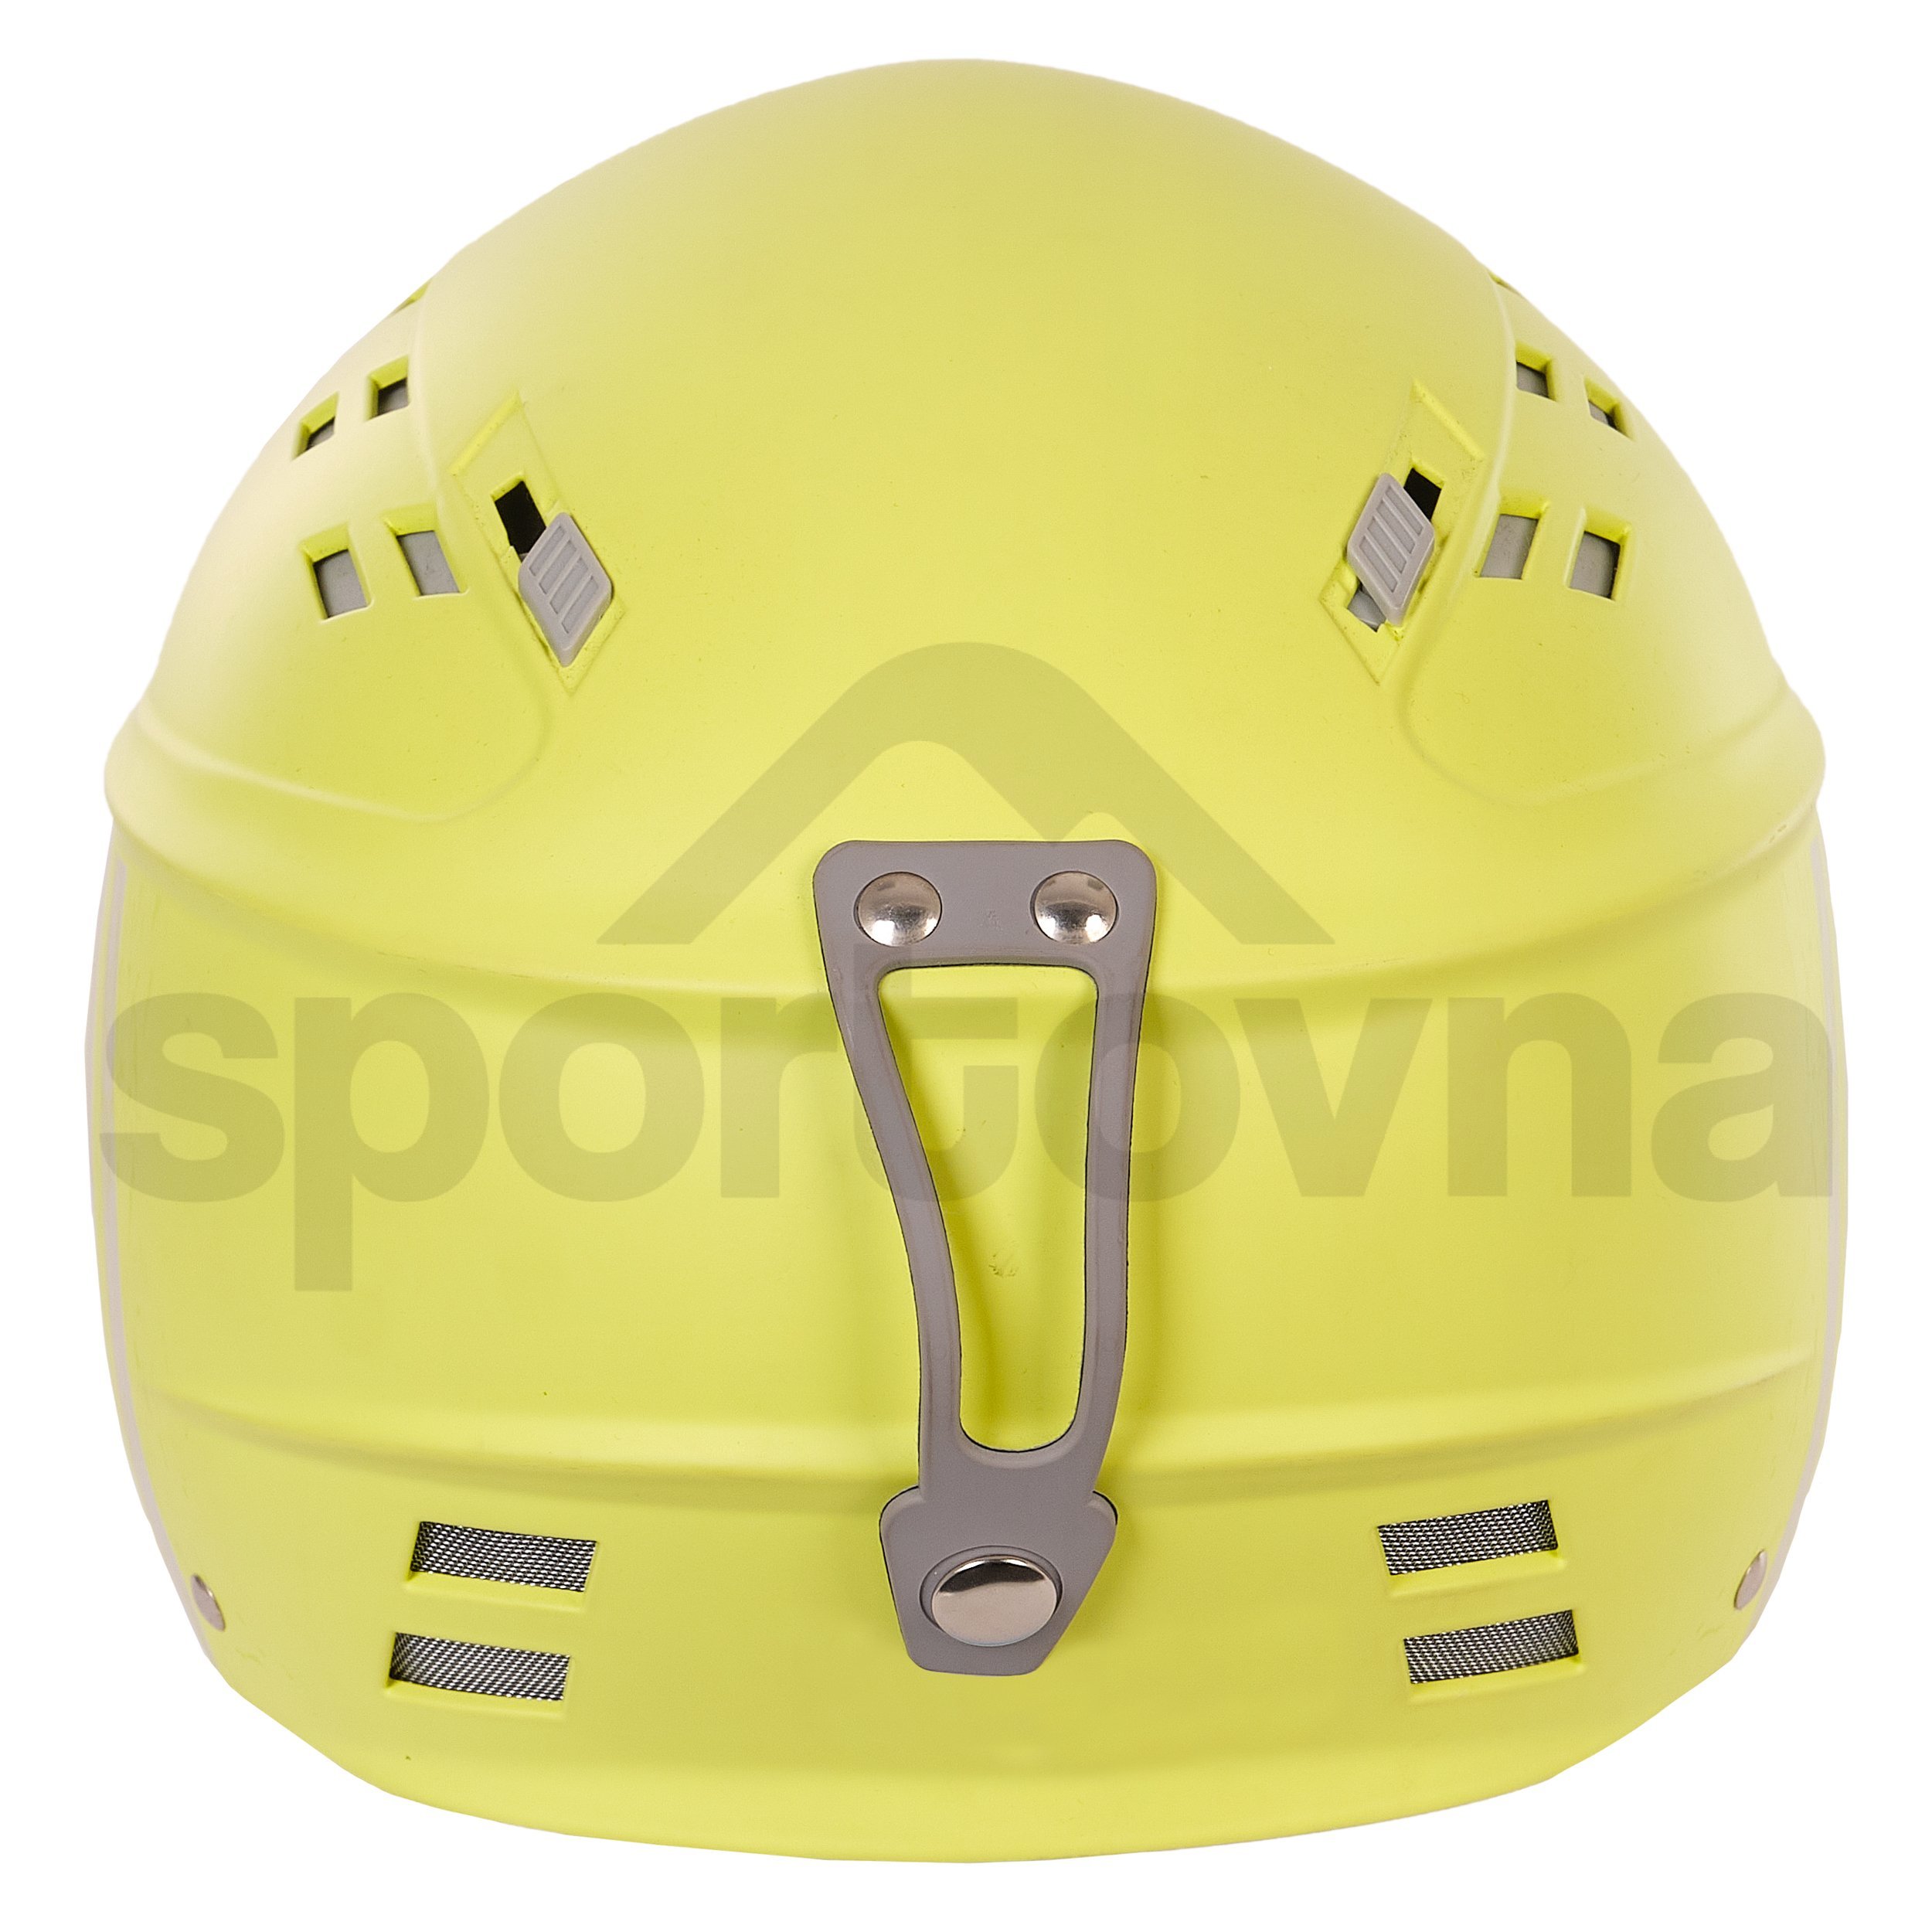 Lyžařská helma TecnoPro Chinook - žlutá